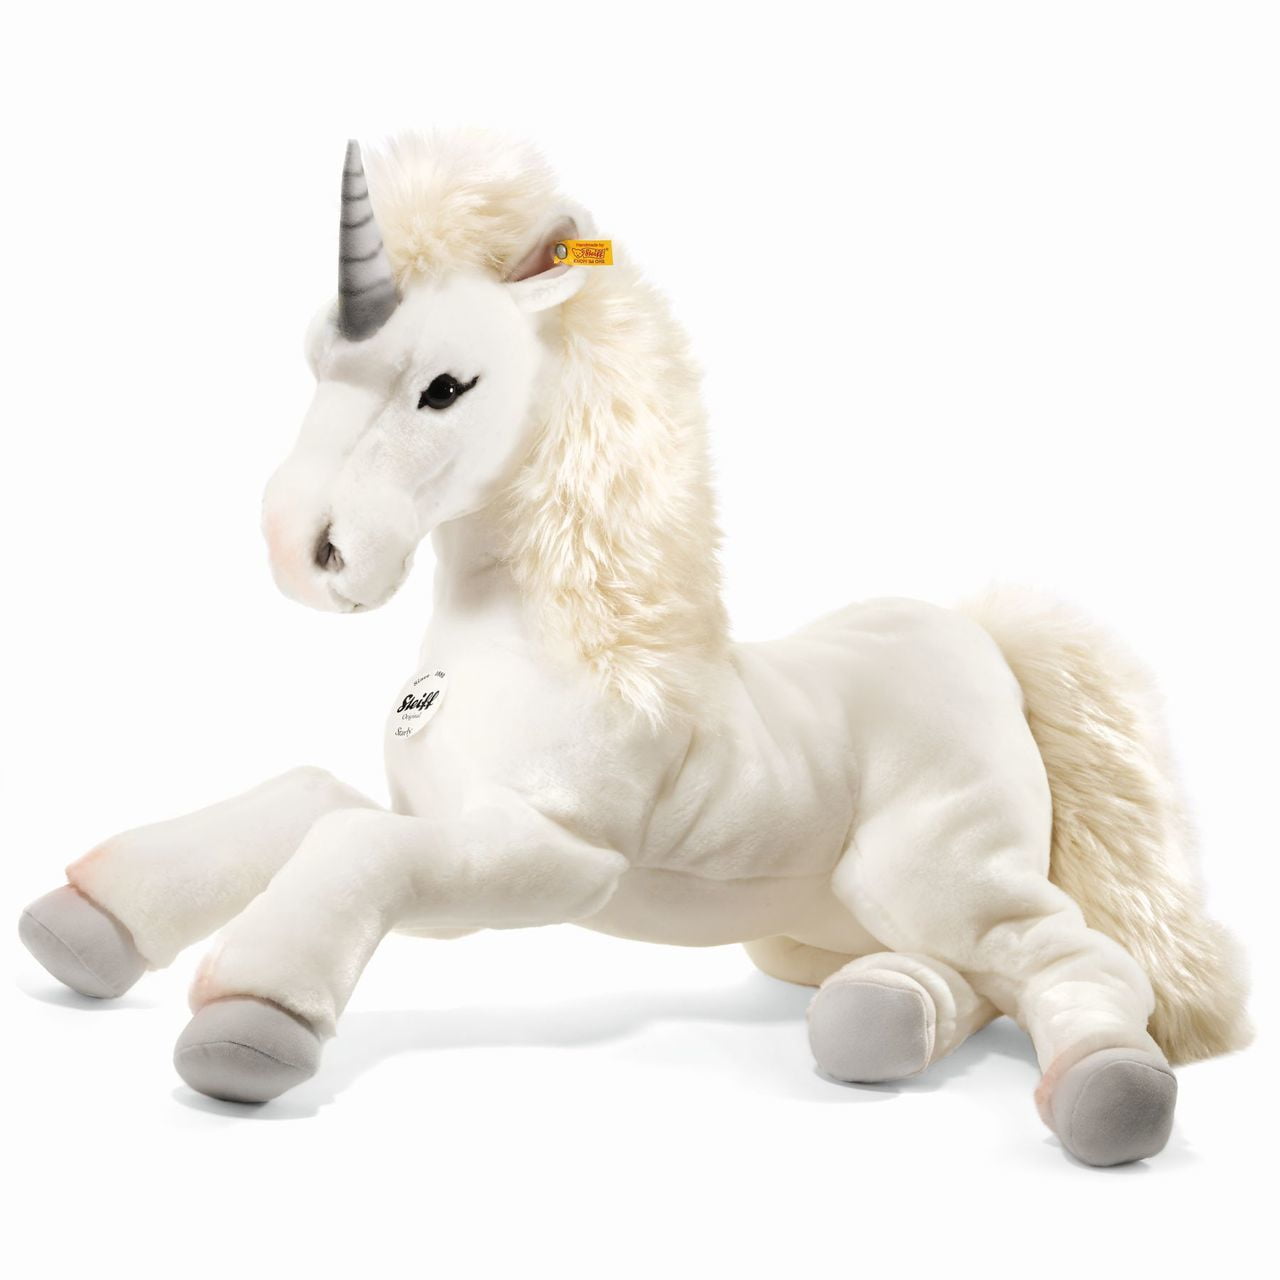 Steiff 015045 Starly Dangling Unicorn with FREE Steiff gift box 